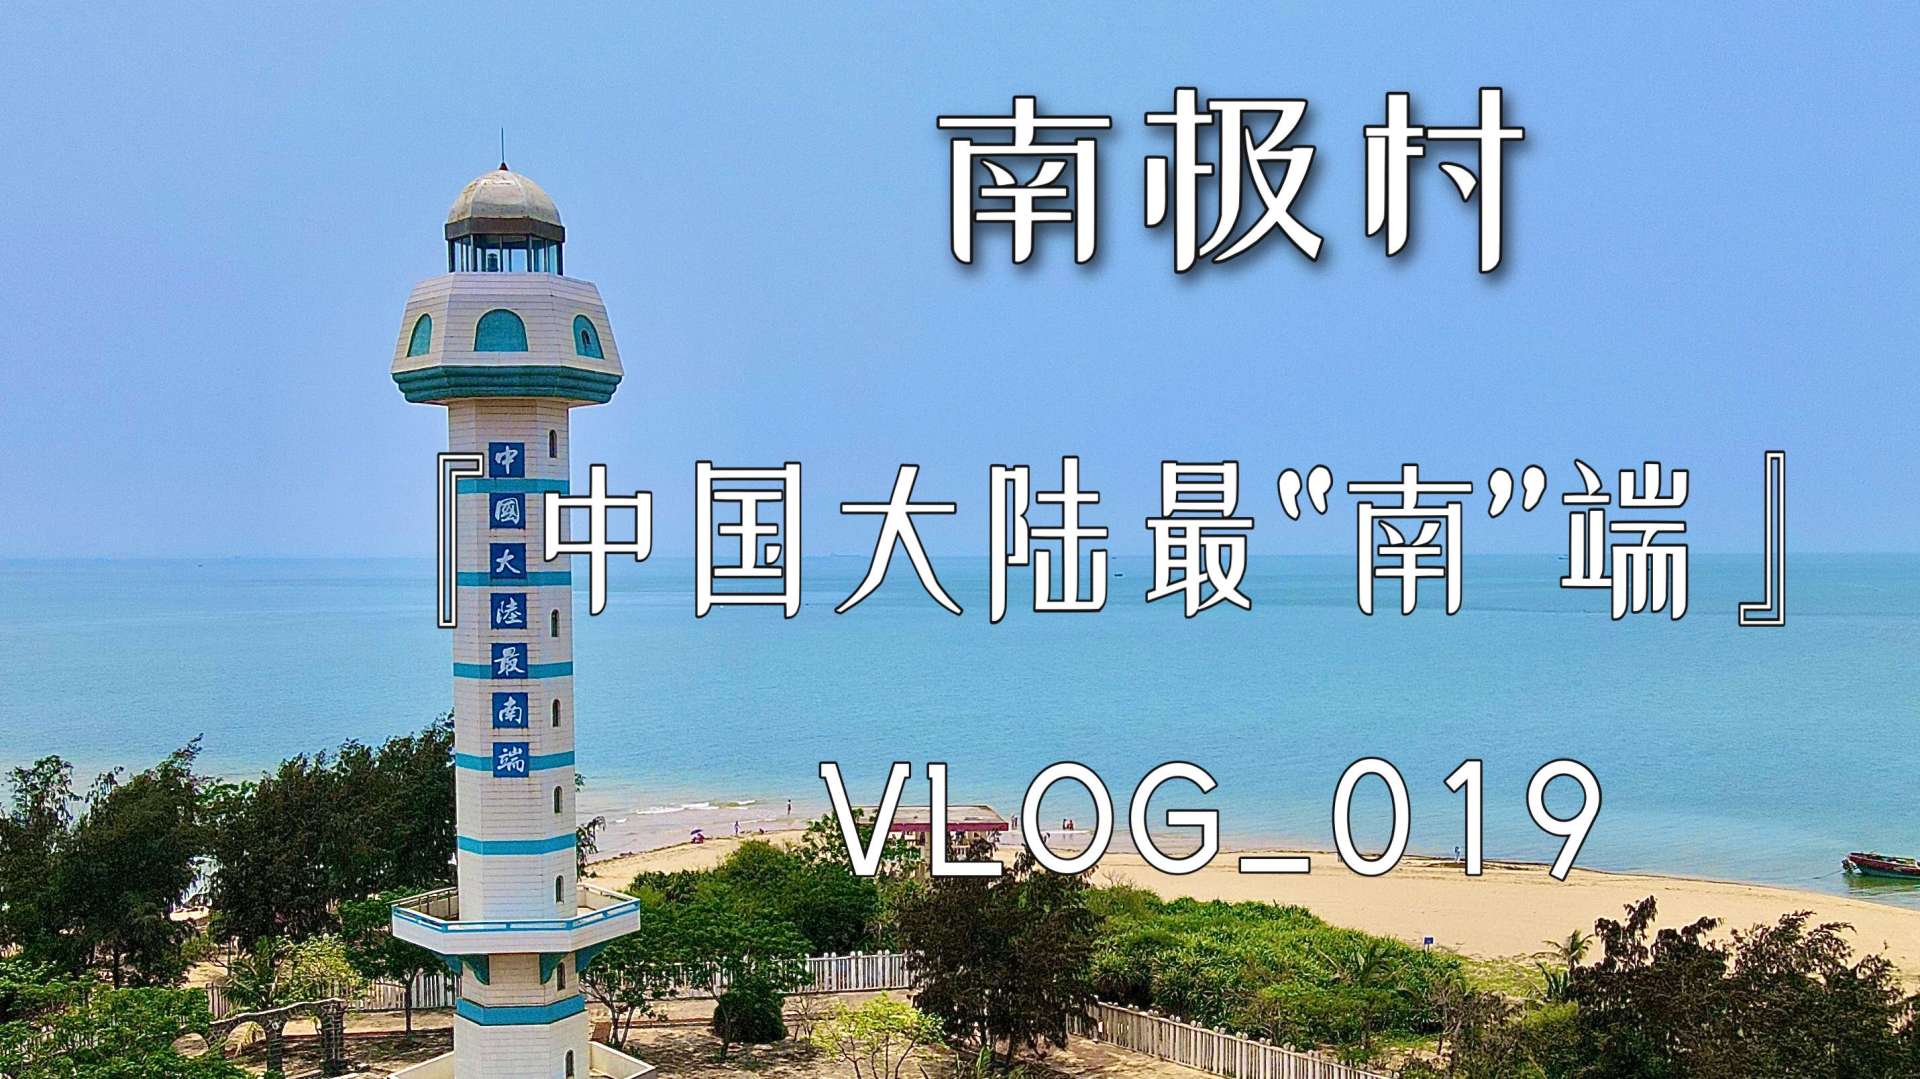 【vlog.019】徐闻南极村,中国大陆最南端,最难的一天